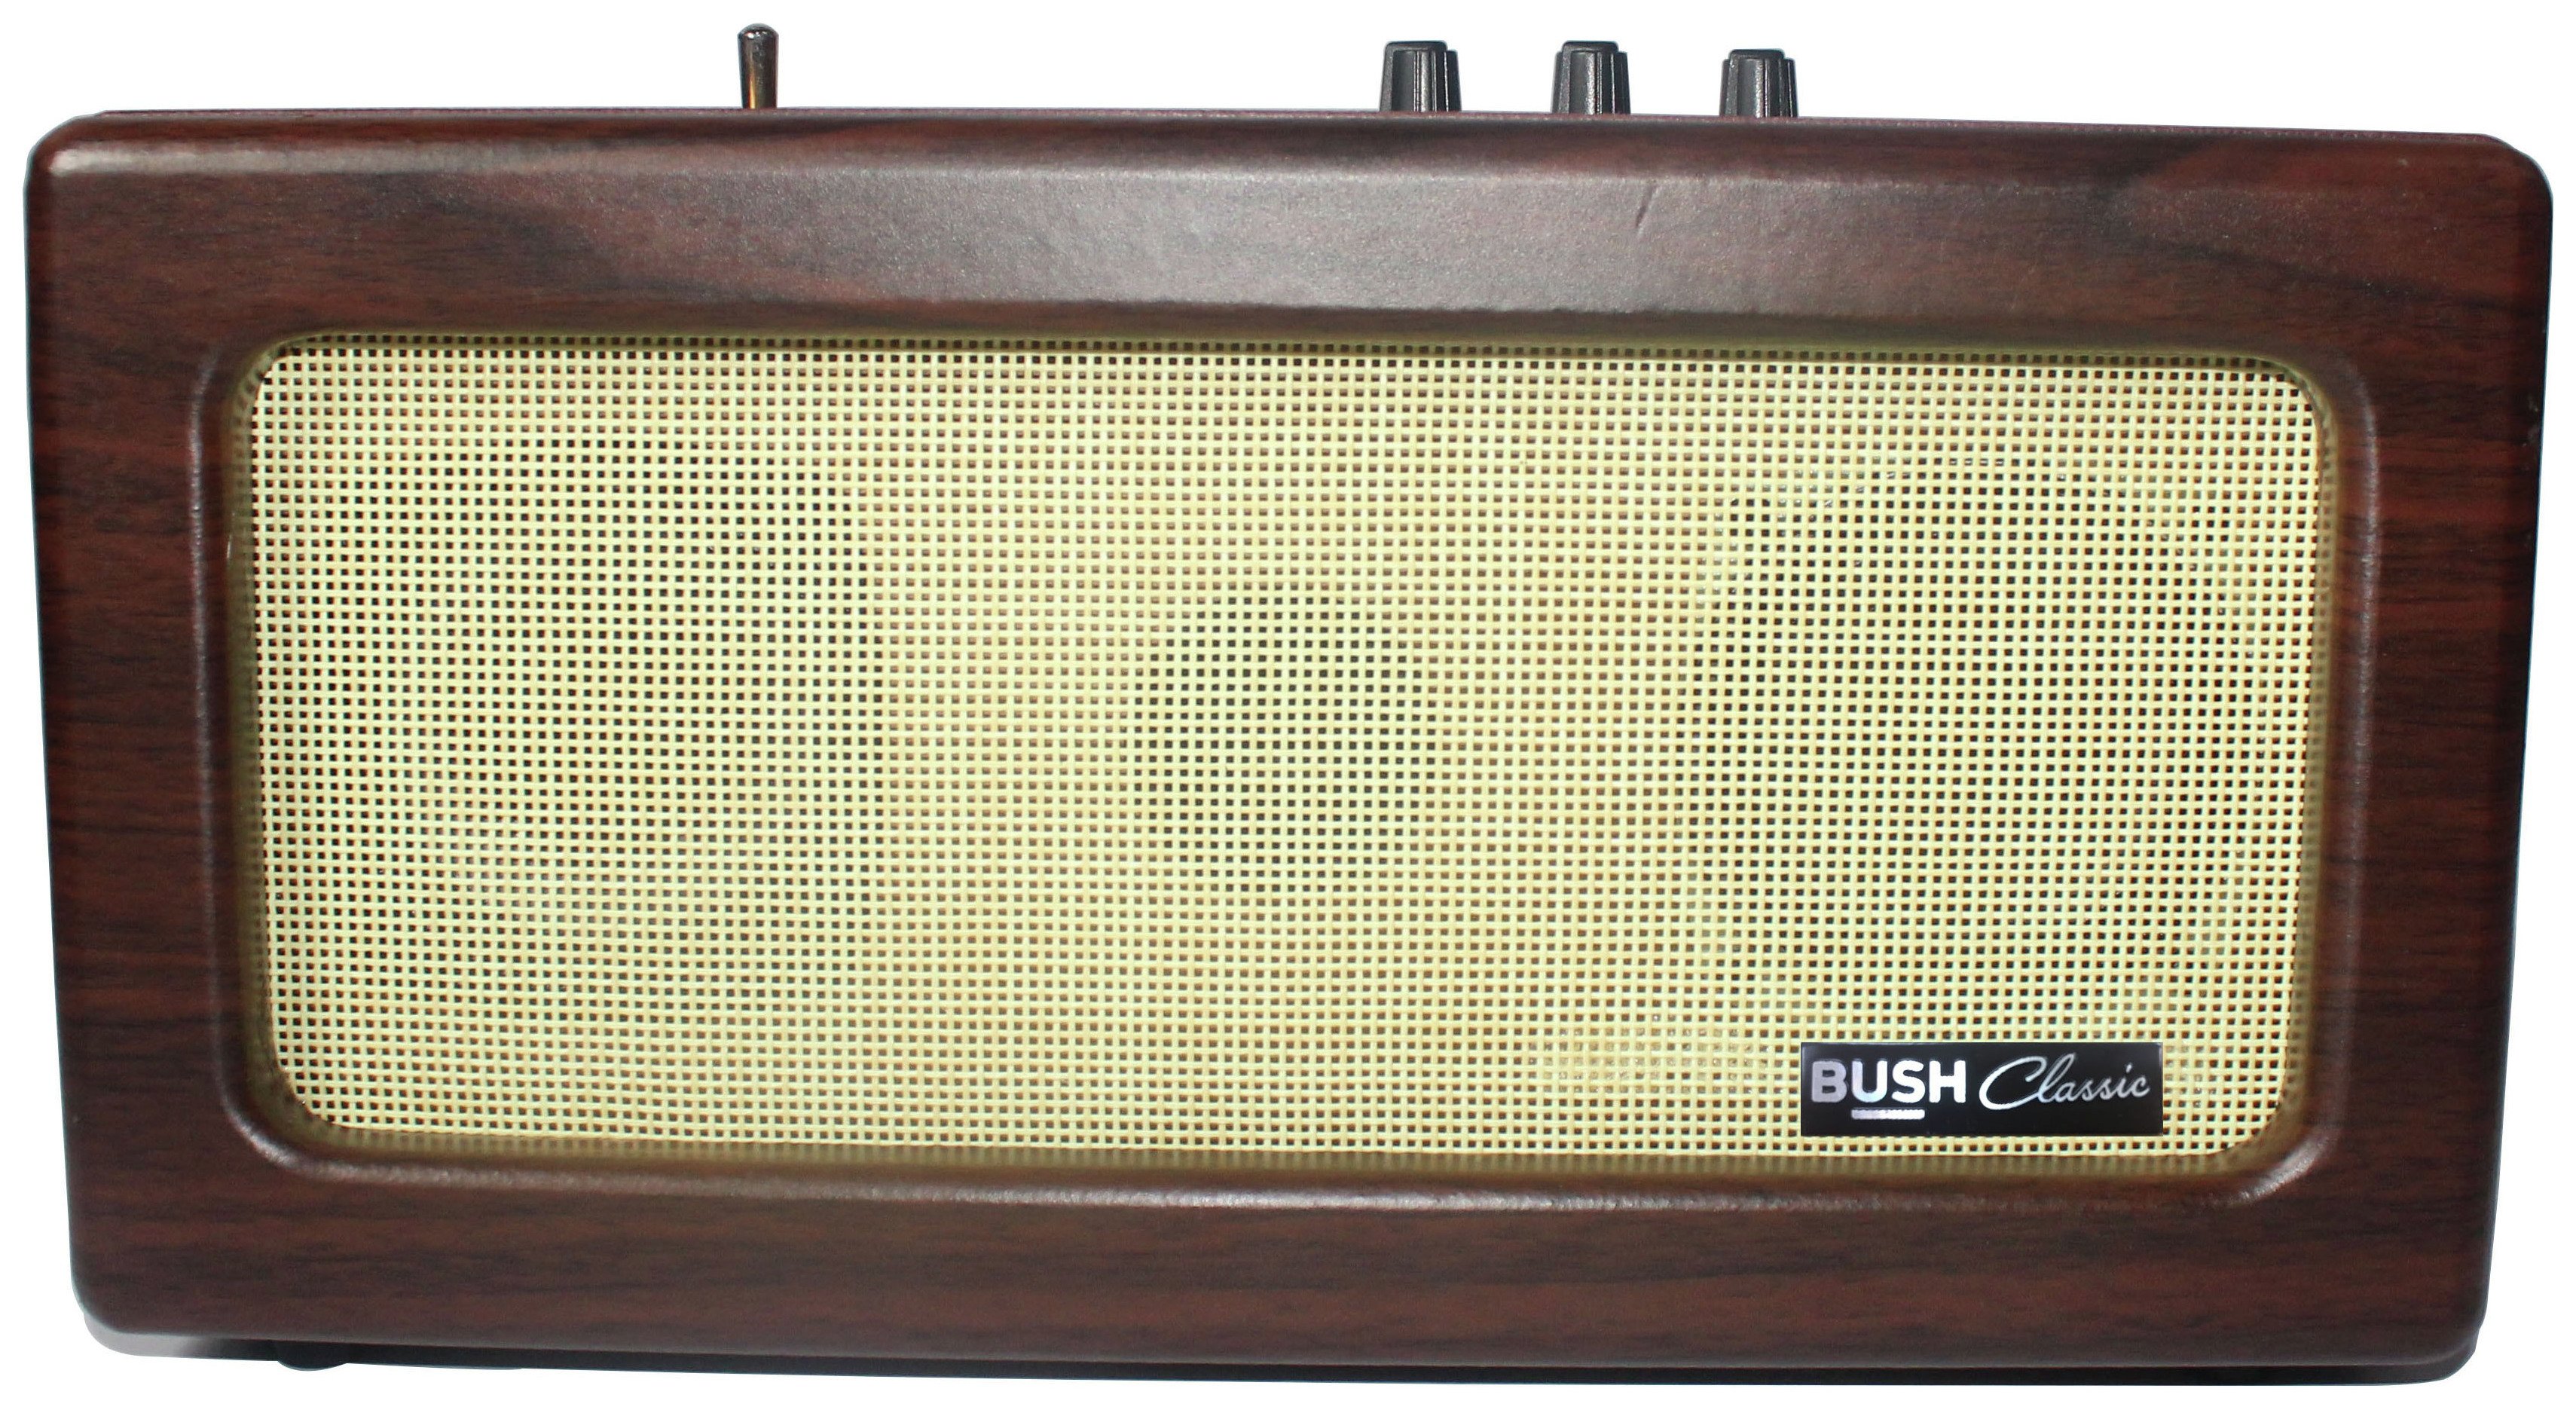 Bush Classic Retro Wireless Bluetooth Speaker - Brown